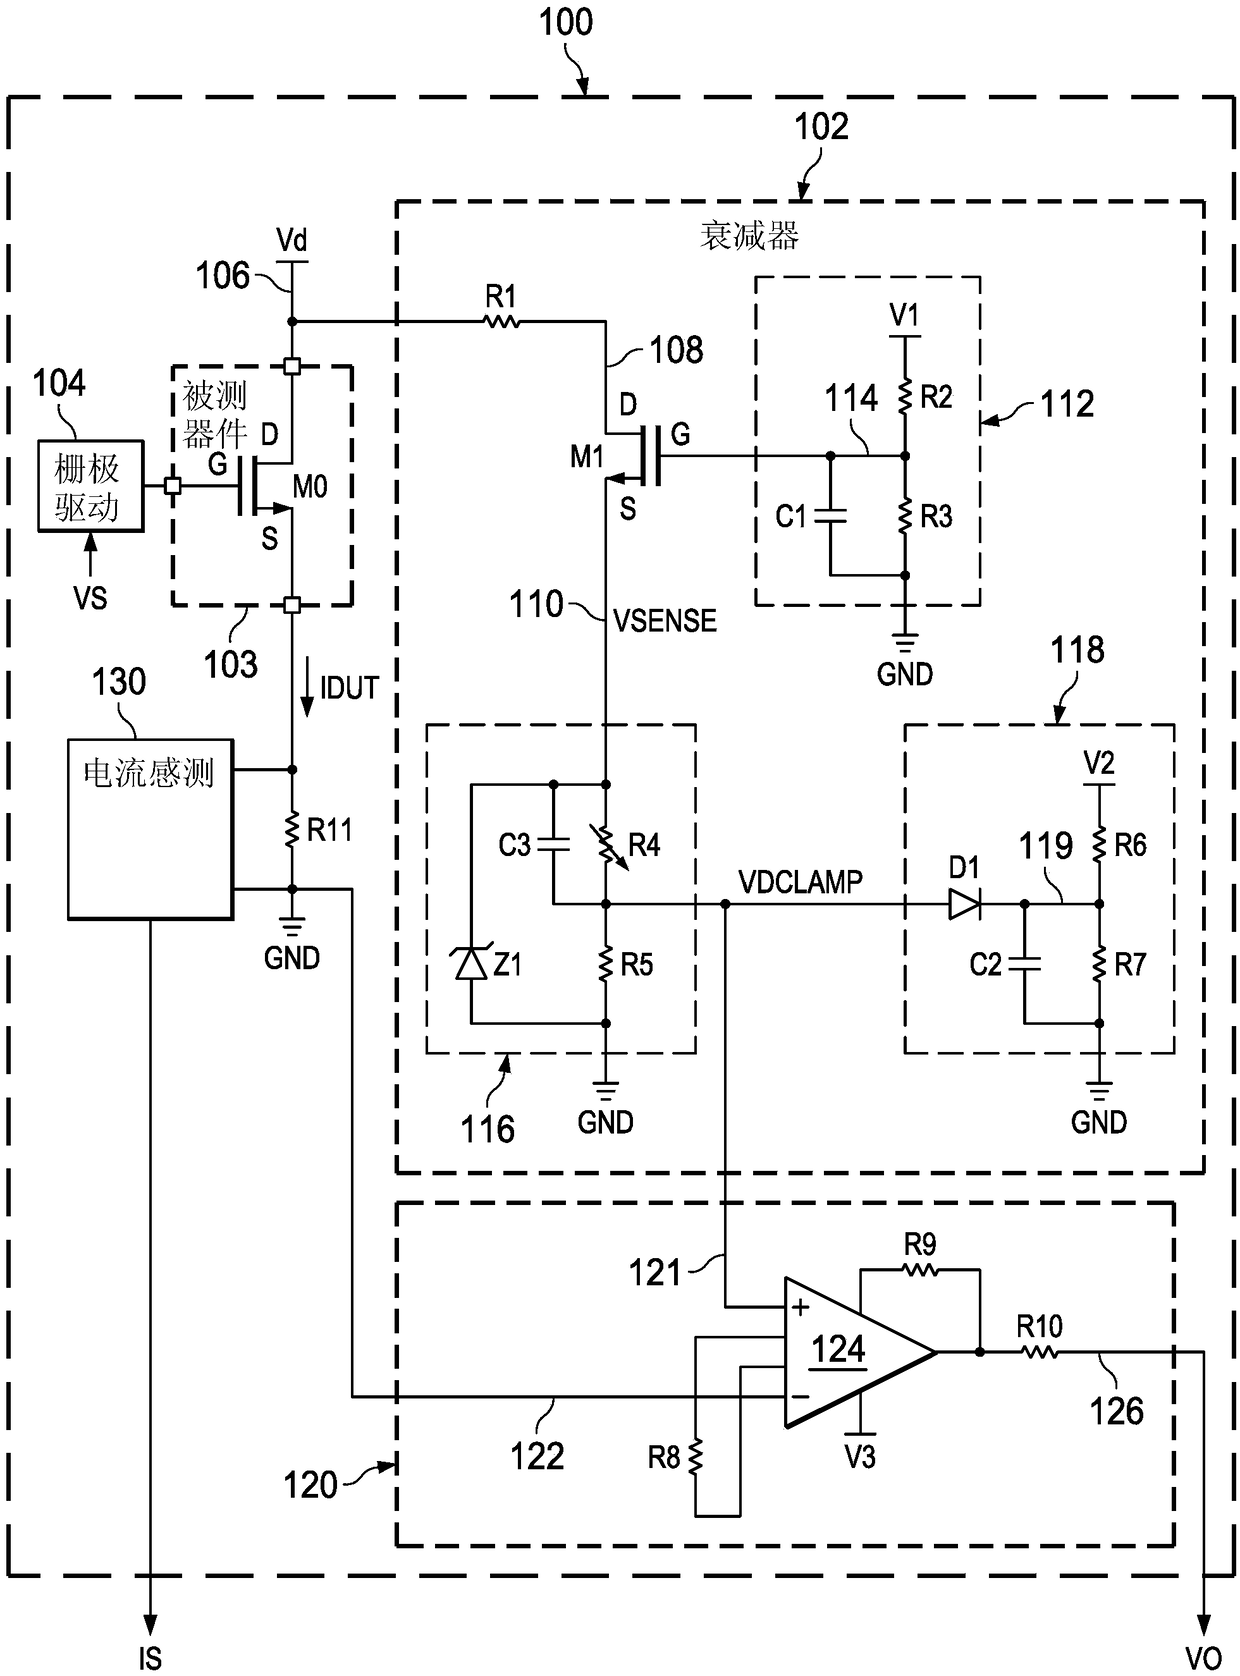 High-resolution power electronics measurements